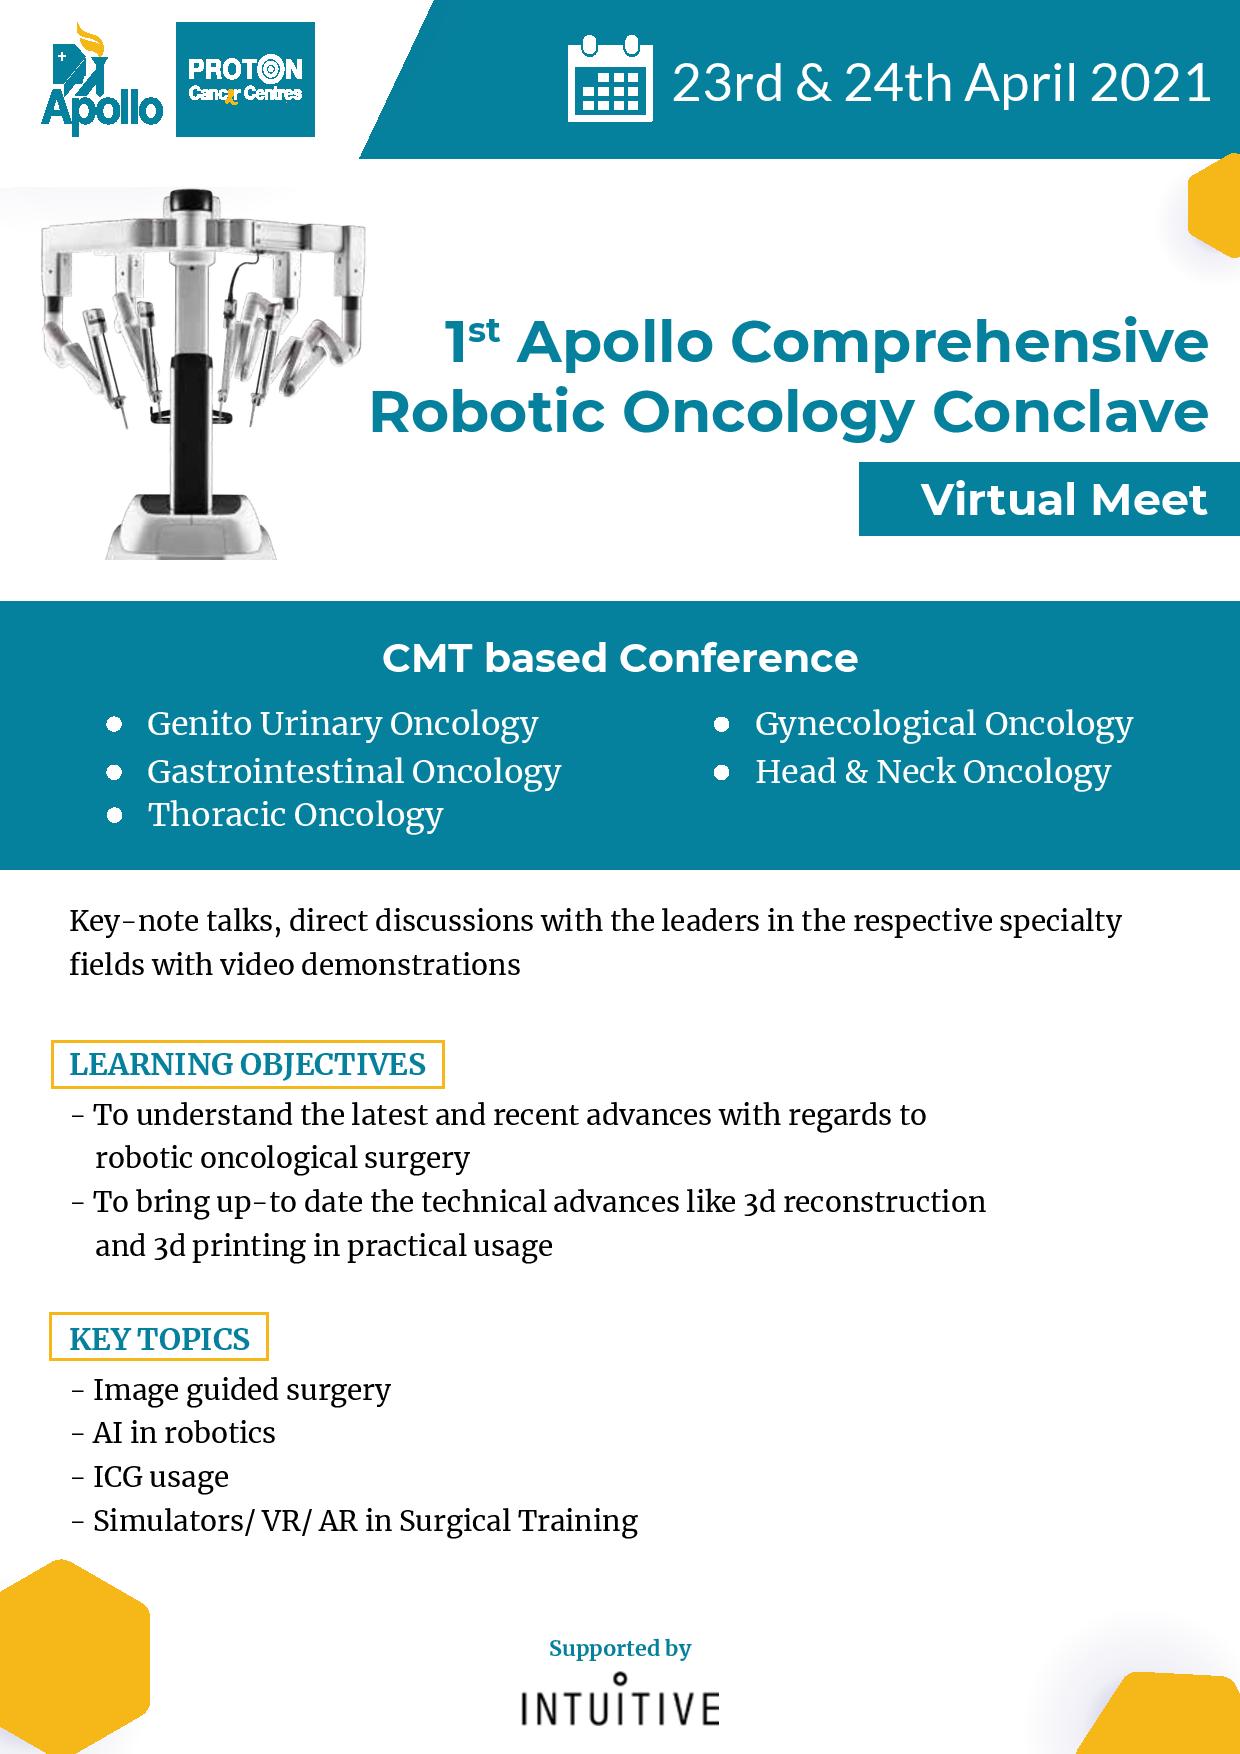 1st Apollo Comprehensive Robotic Oncology Conclave